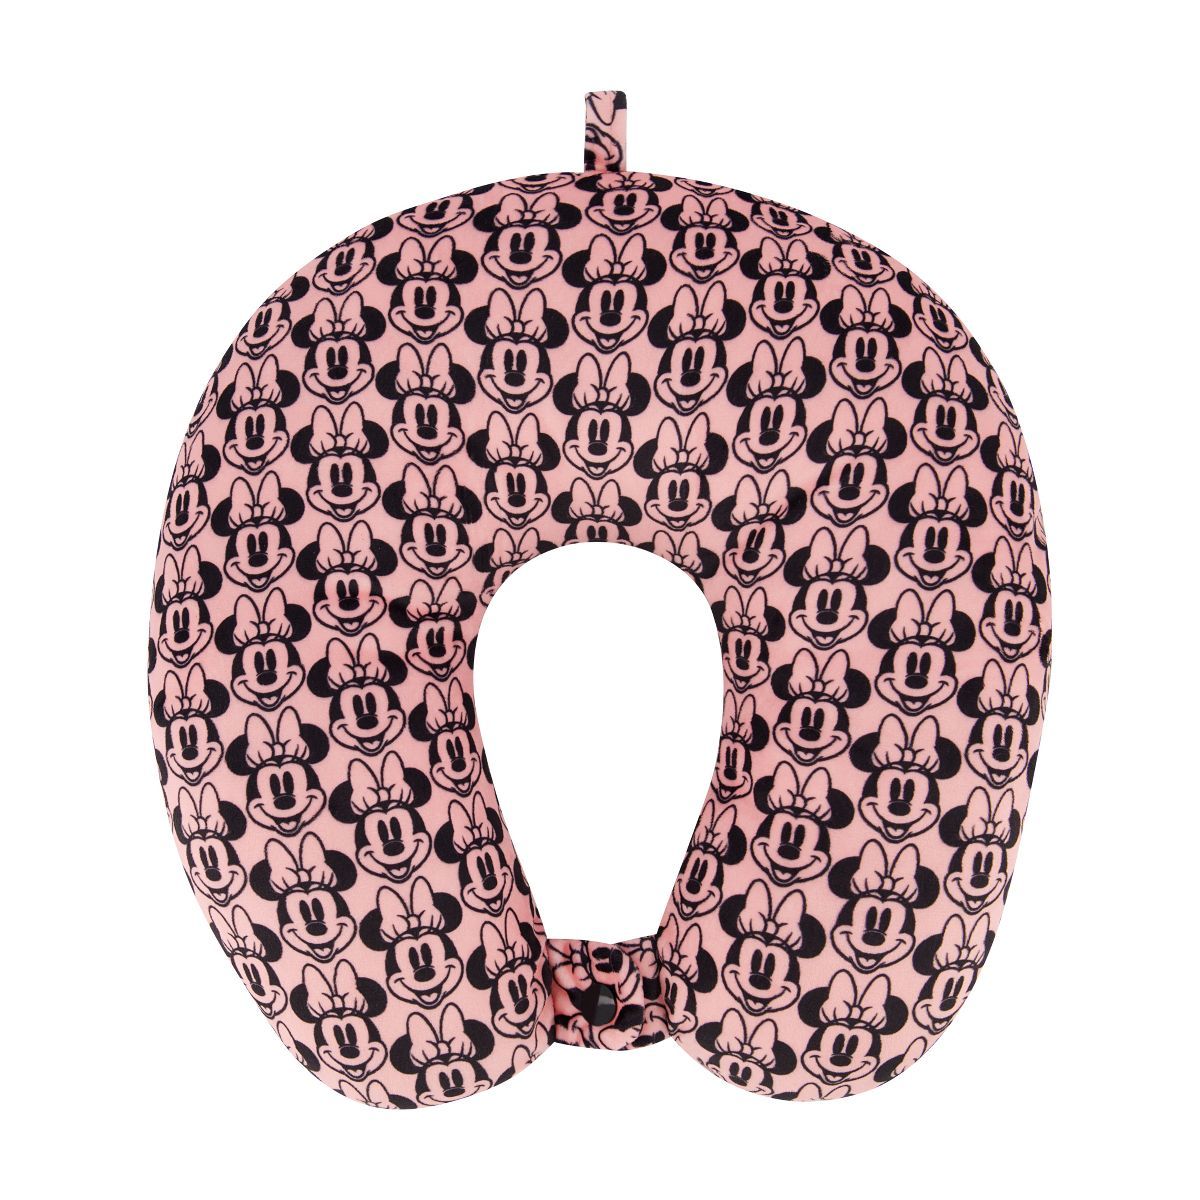 Disney Minnie Mouse Travel Neck Pillow Pink & Black | Target